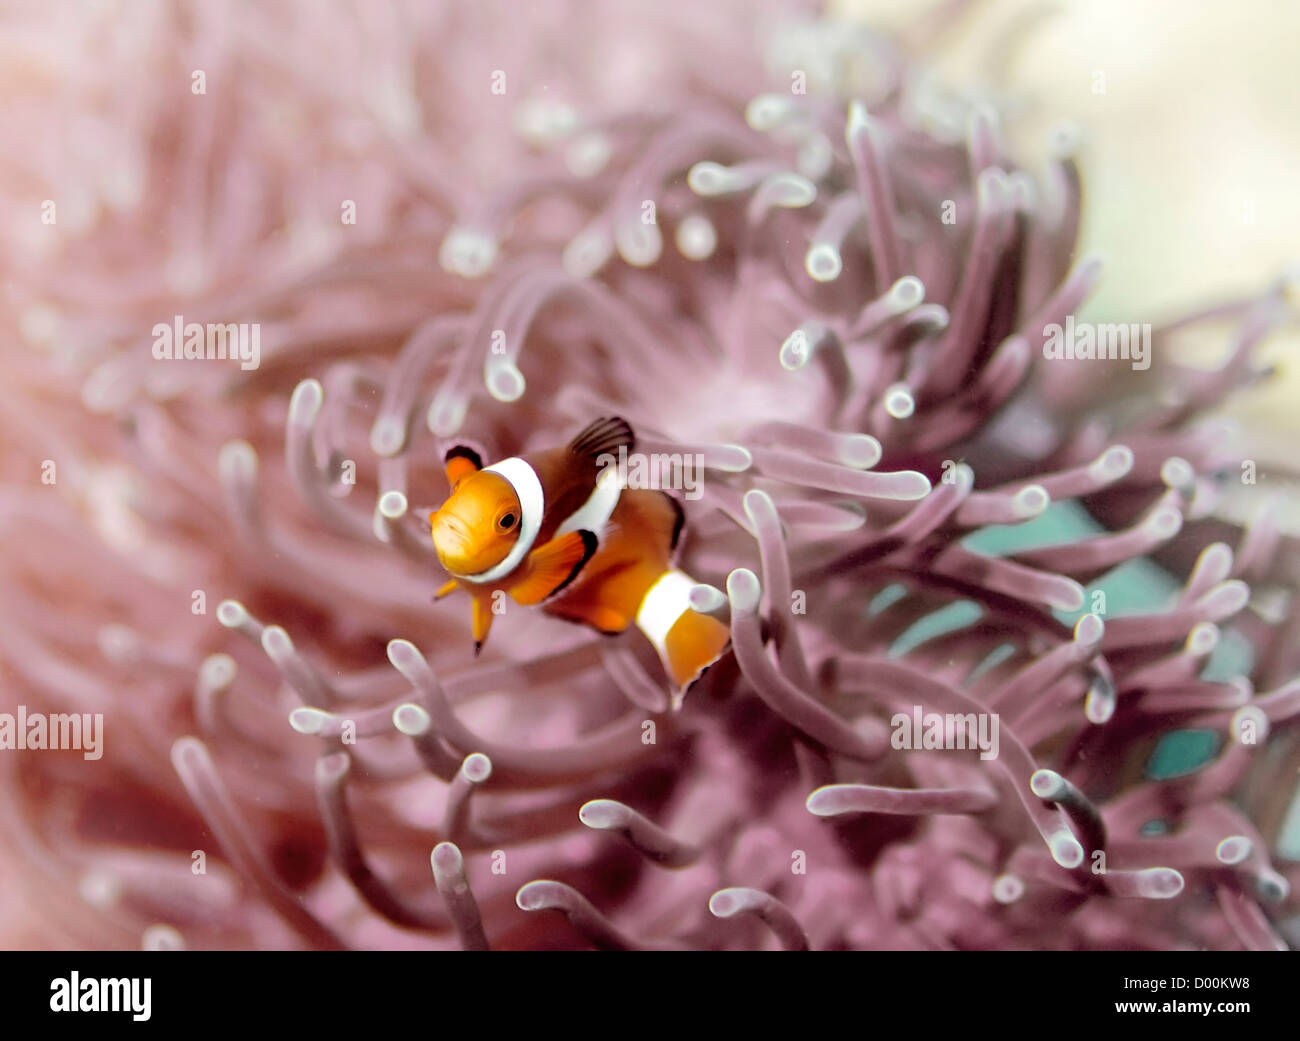 Payaso anemonefish Foto de stock